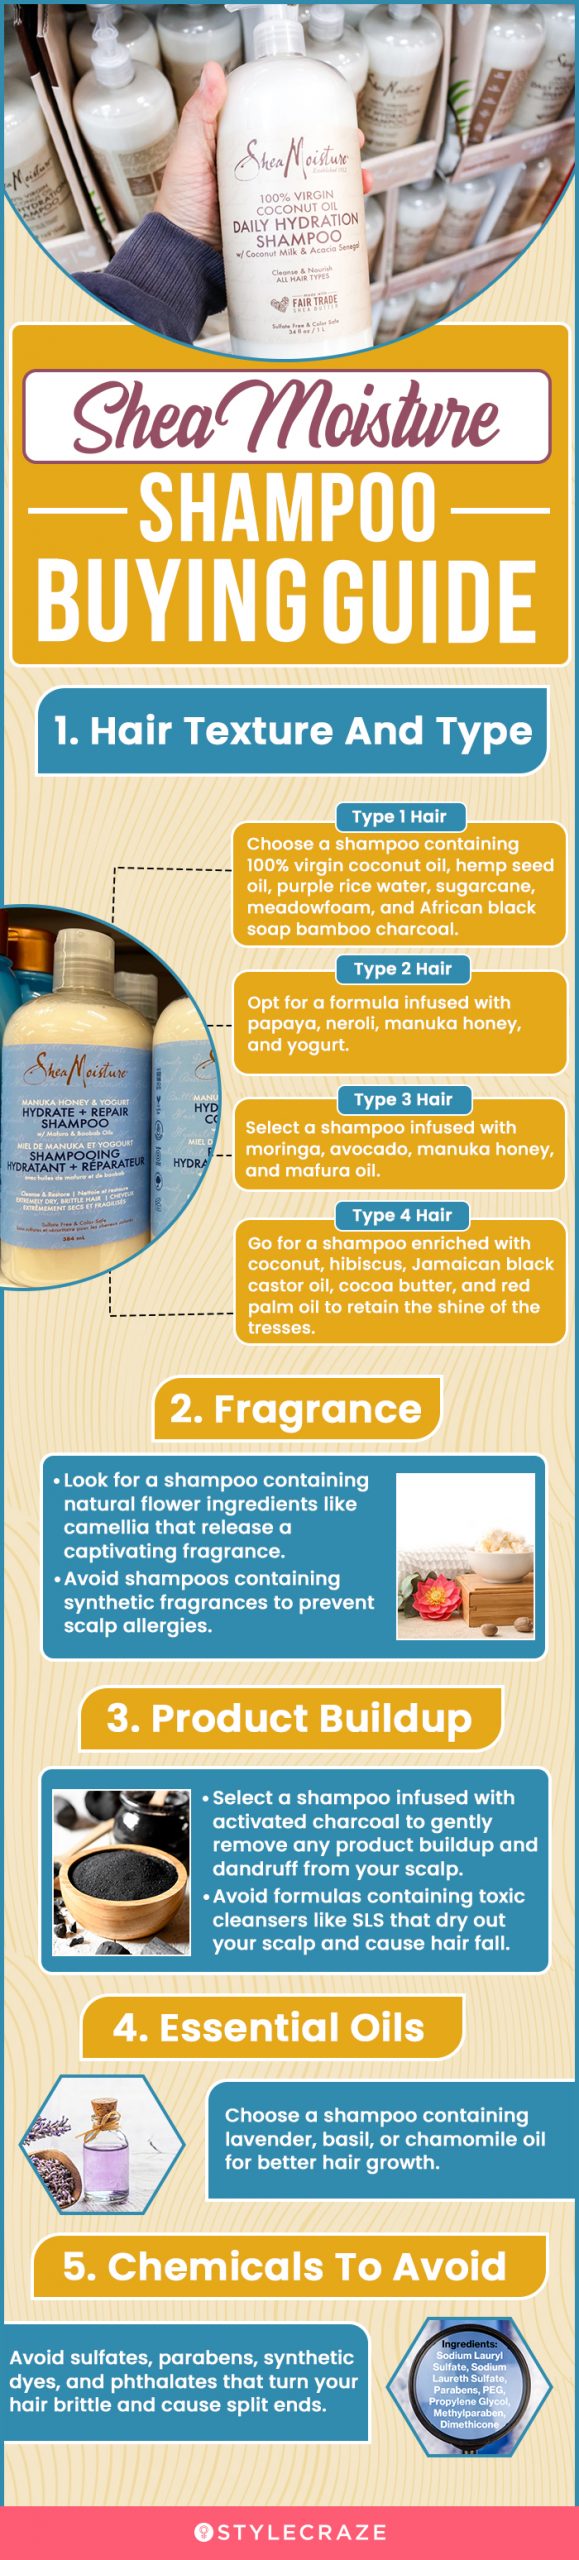 SheaMoisture Shampoo Buying Guide (infographic)